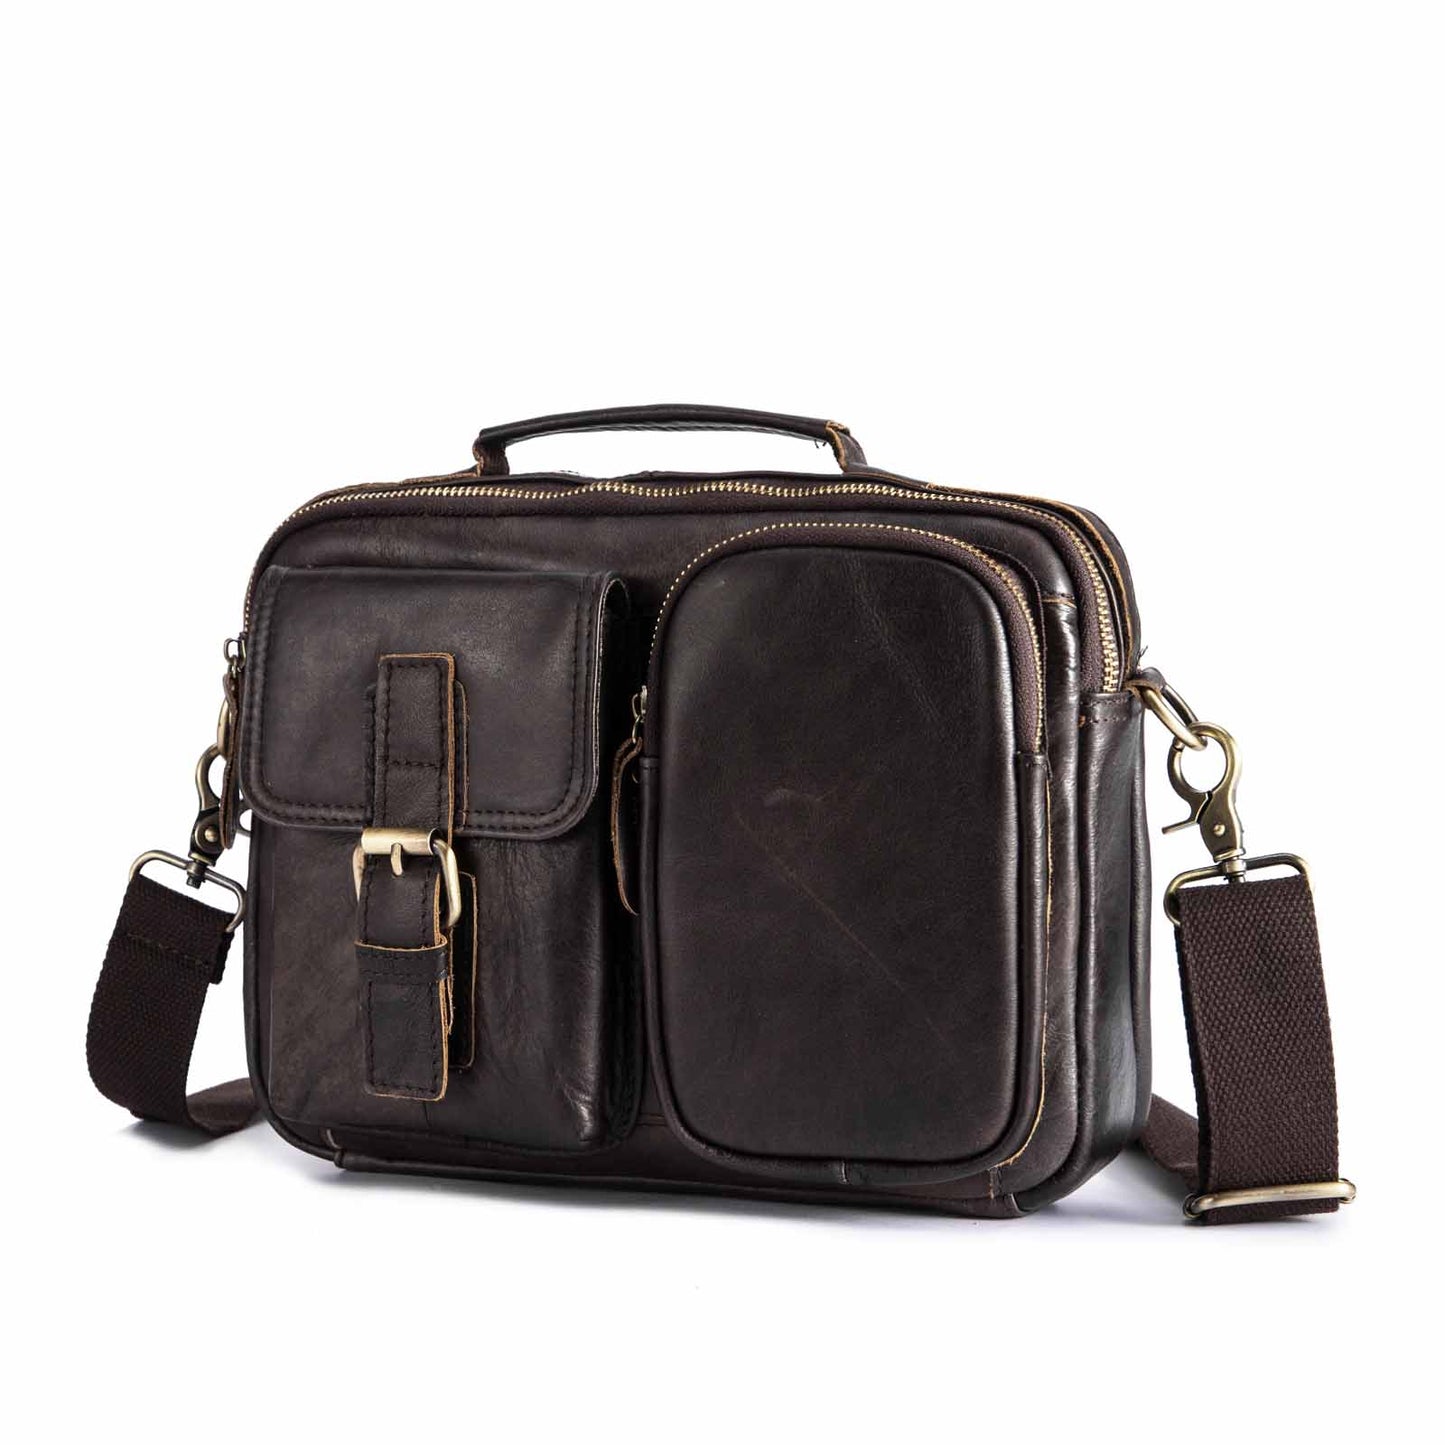 Quality Original Leather Design Male Shoulder messenger bag cowhide fashion Cross-body Bag 9&quot; Pad Tote Mochila Satchel bag 036-c